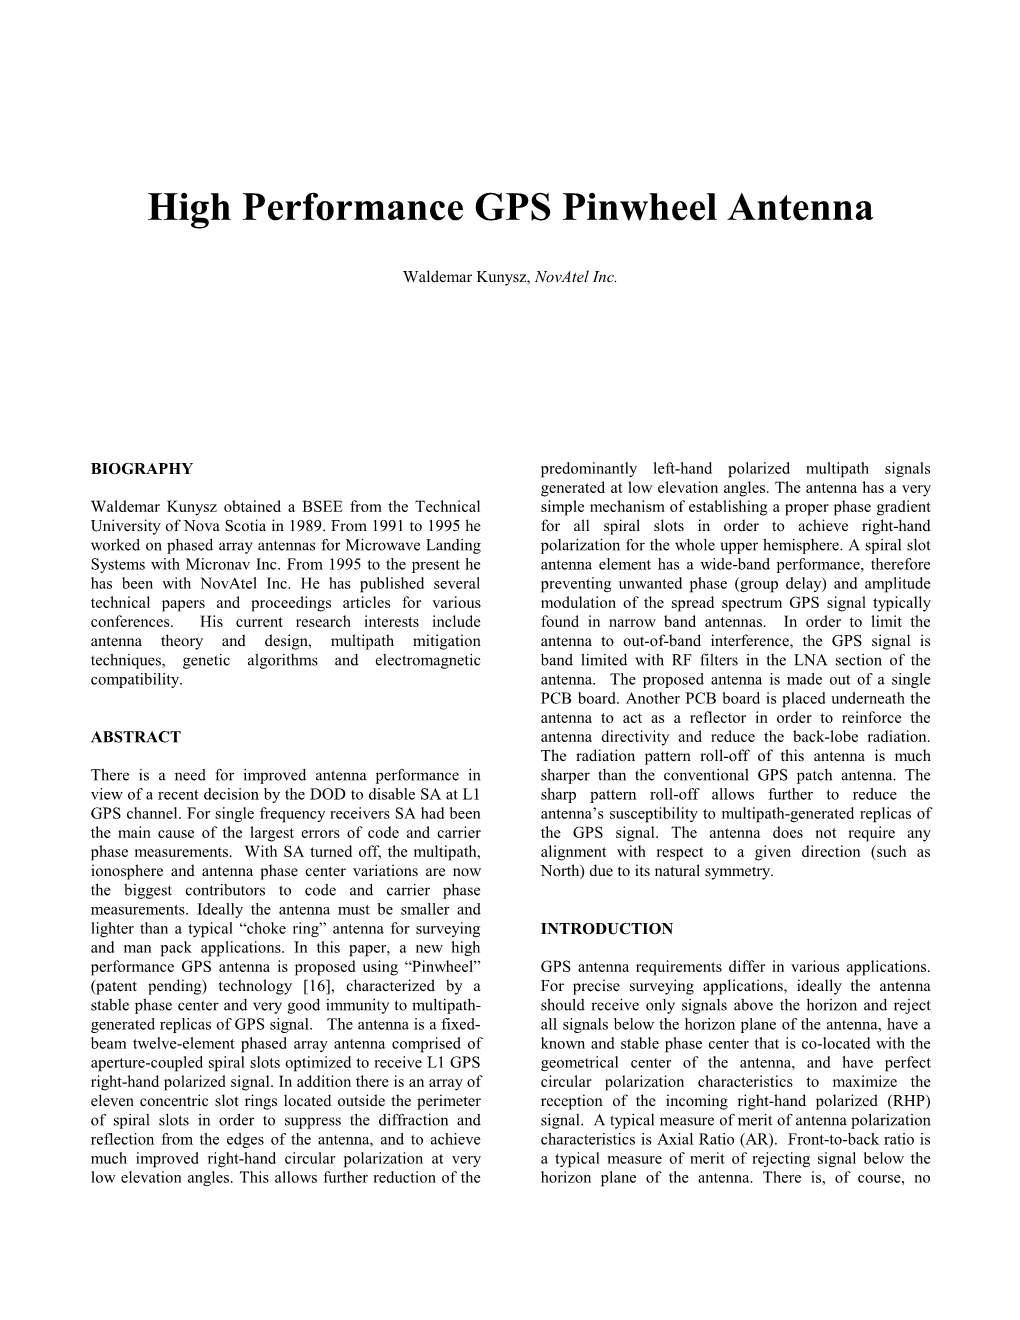 High Performance GPS Pinwheel Antenna (Technical Paper)